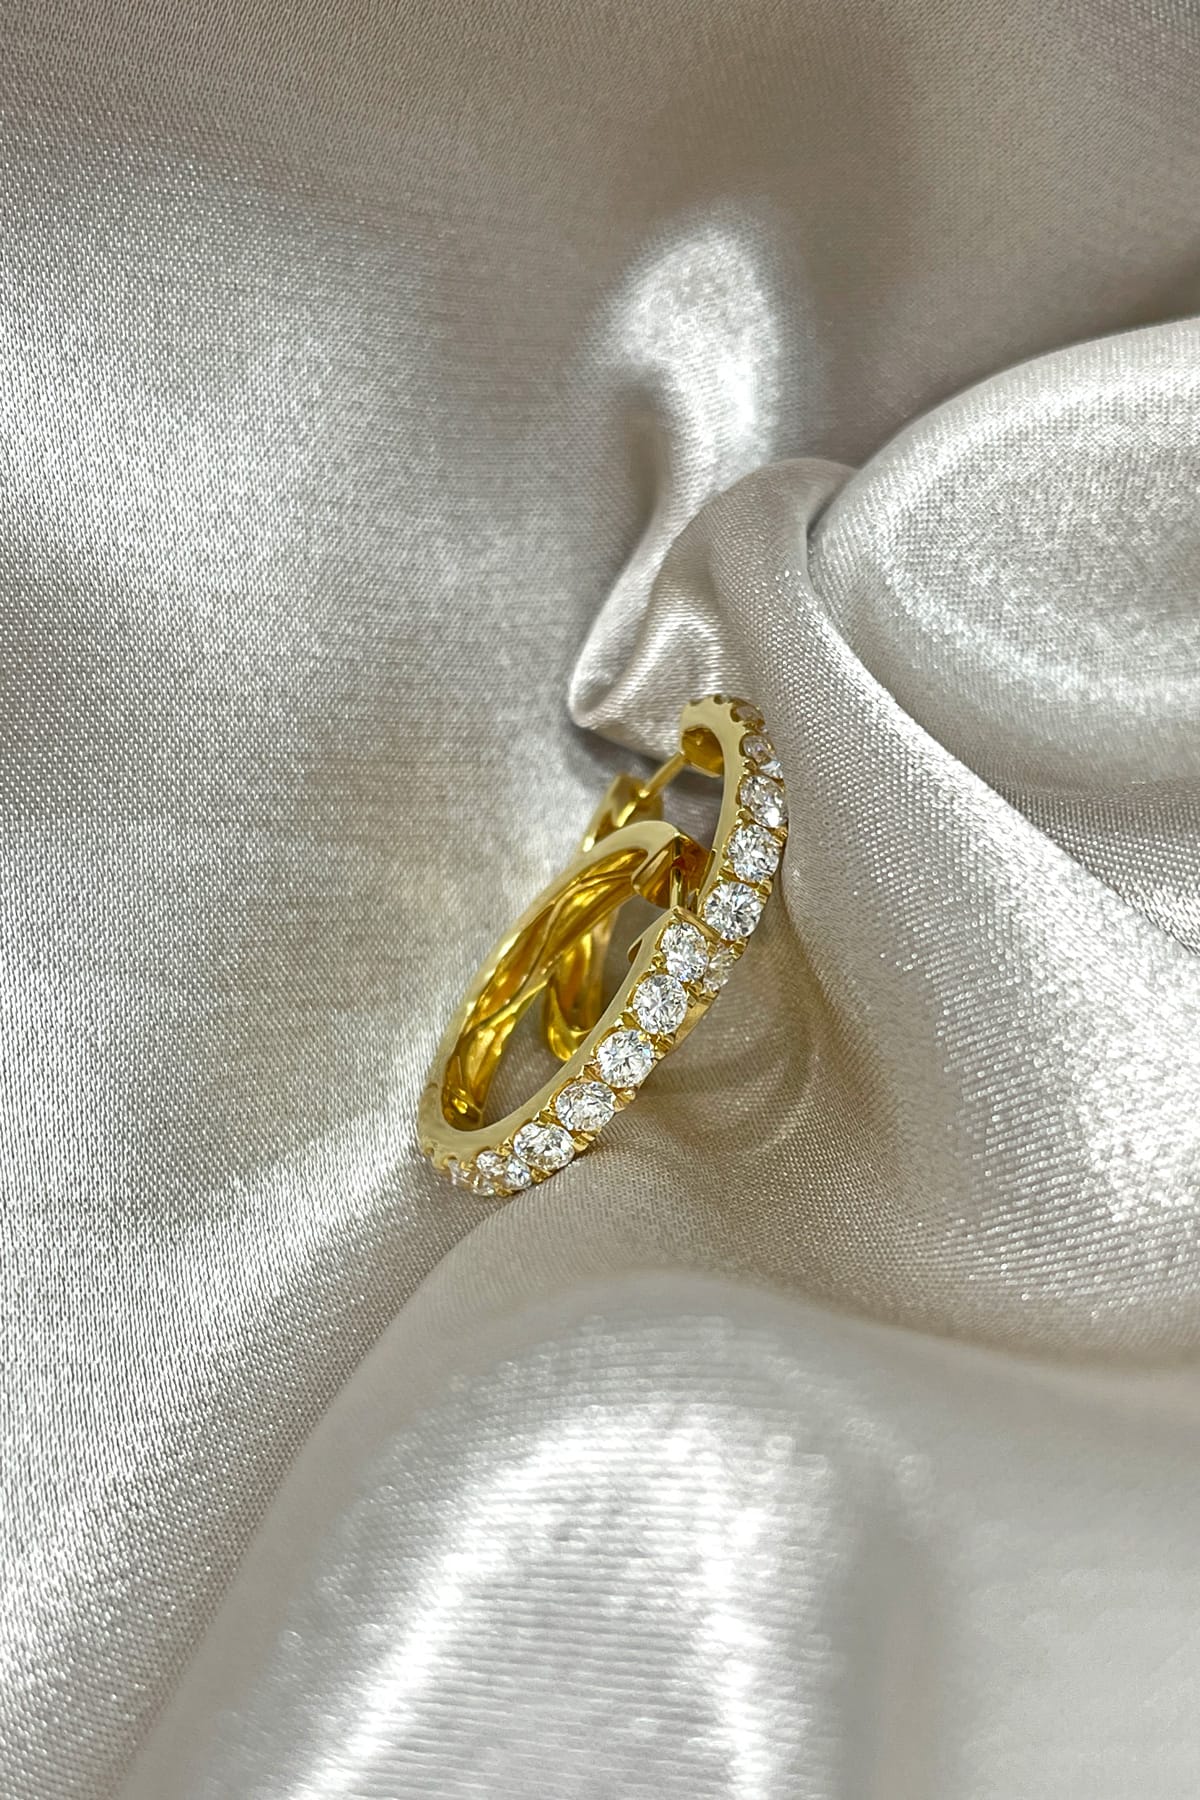 18 Carat Yellow Gold Diamond Set Hoop Earrings available at LeGassick Diamonds and Jewellery Gold Coast, Australia.